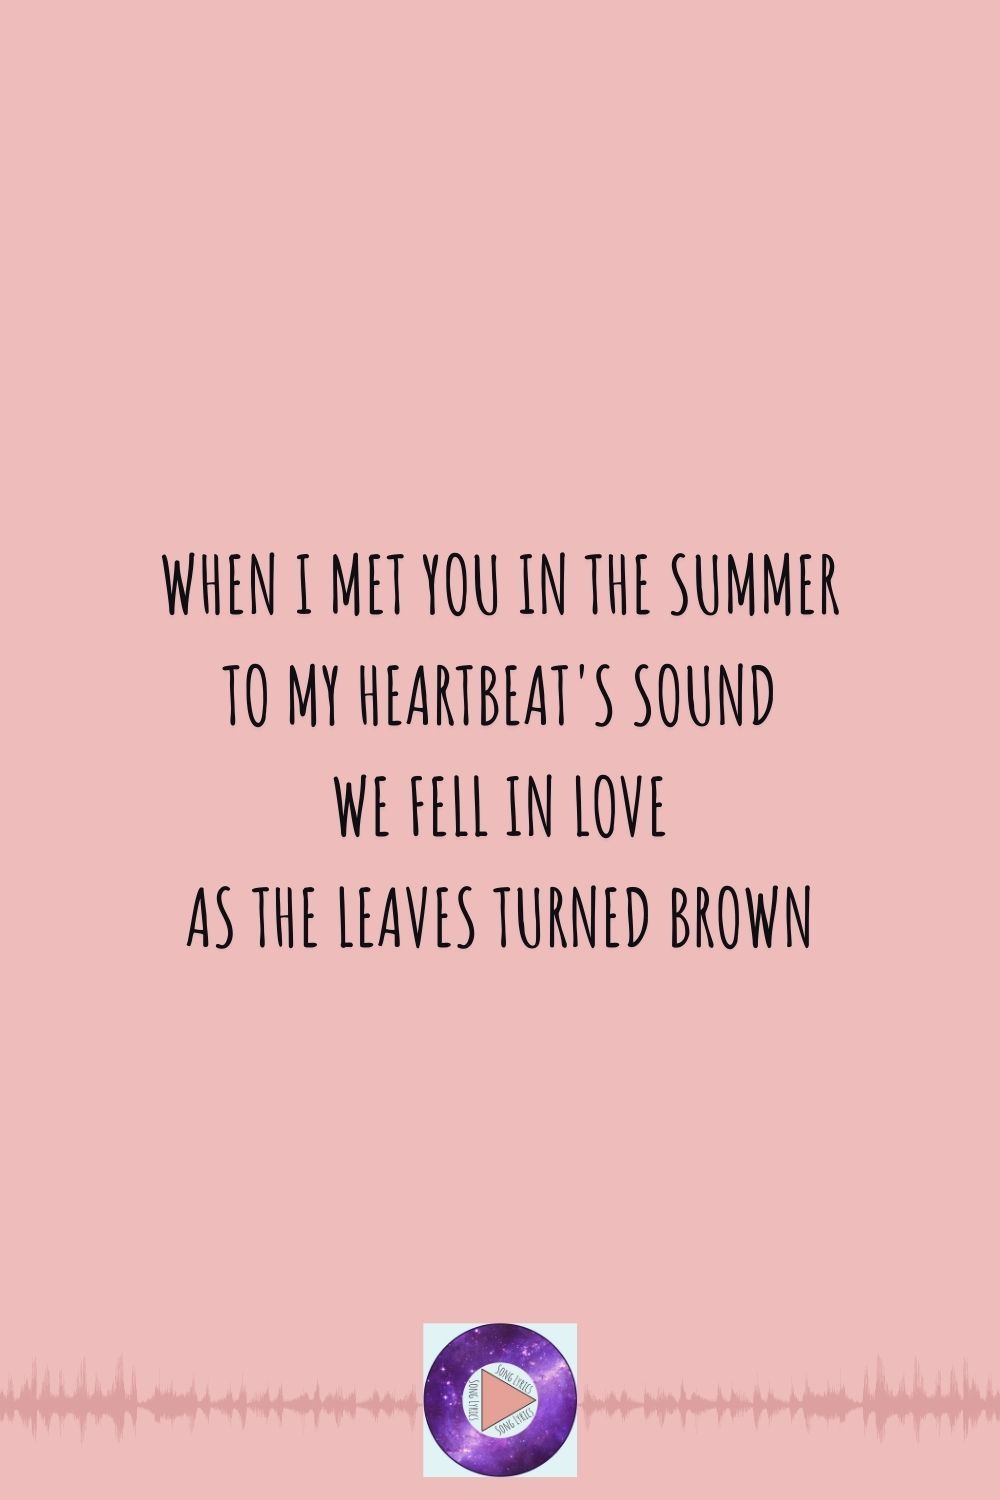 when i met ya in the summer lyrics